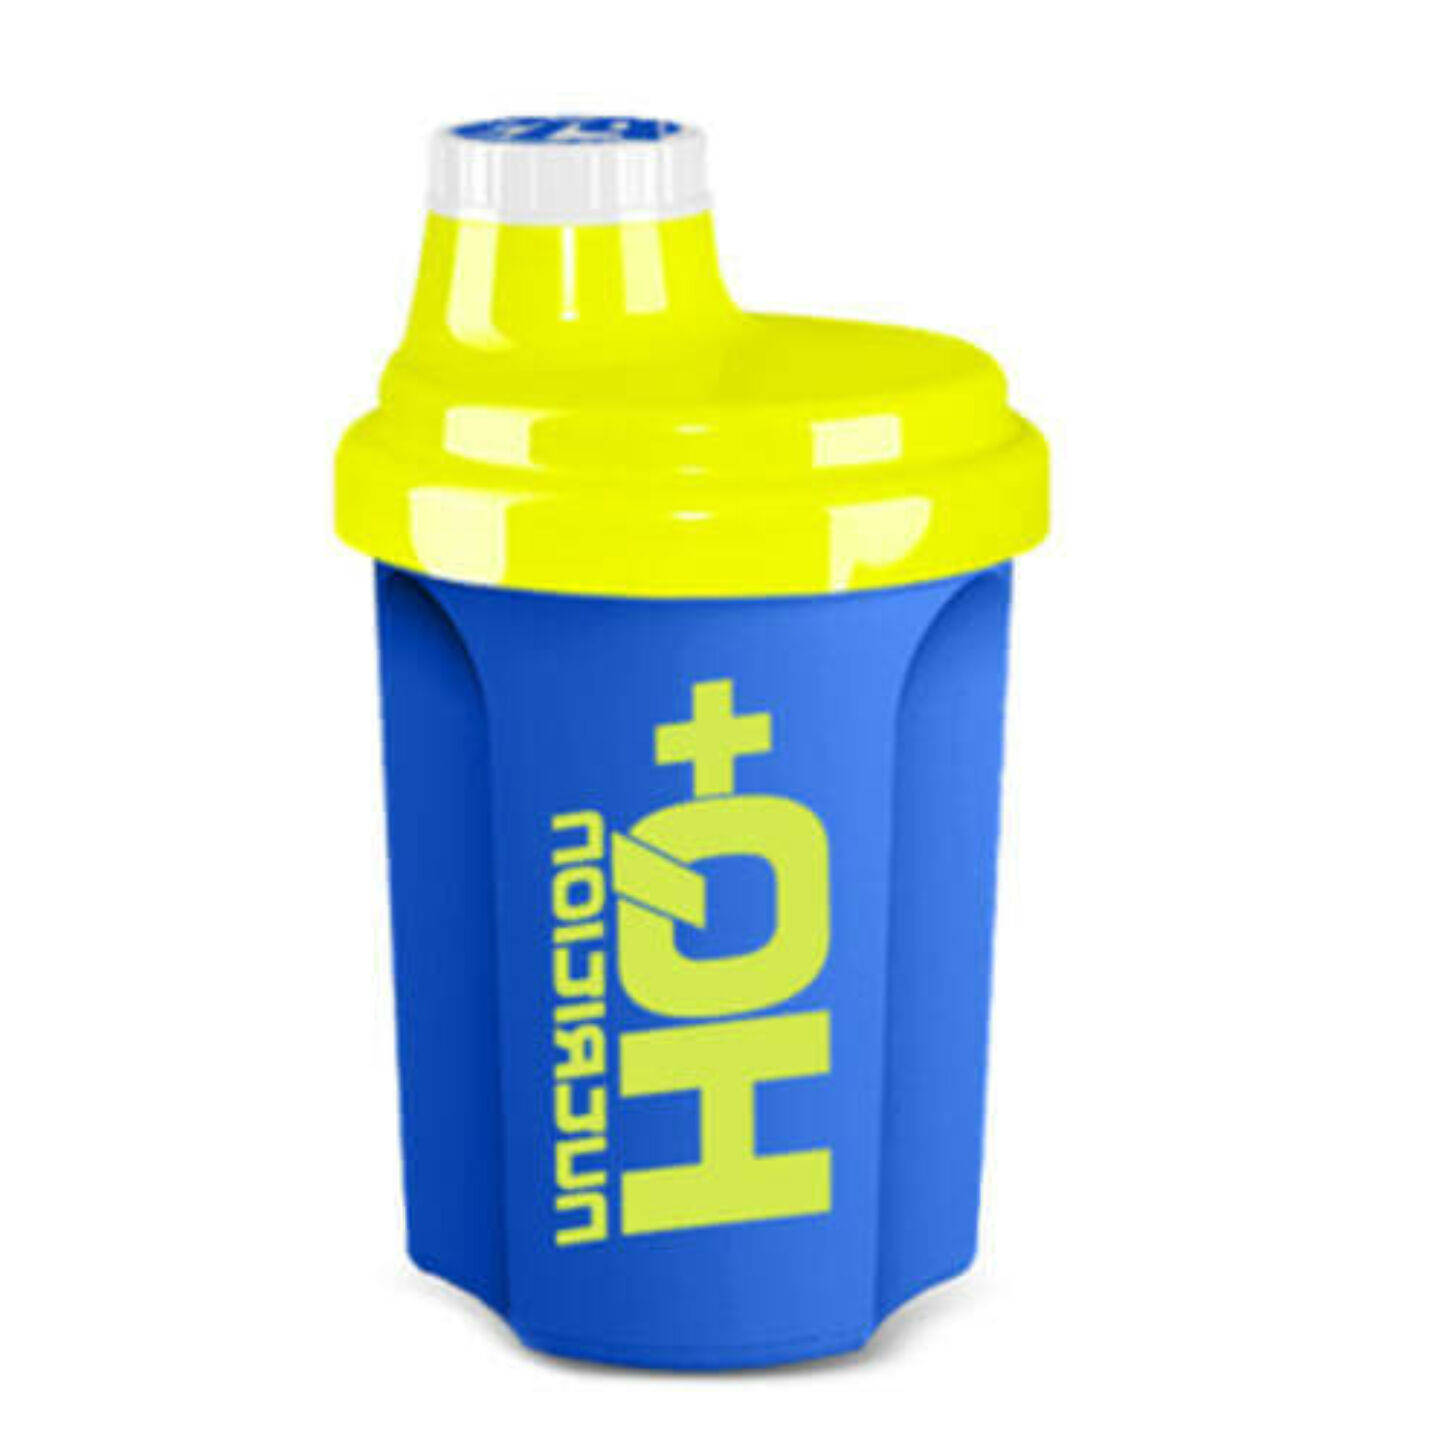 HQ+ Nutrition Shaker - 300 ml